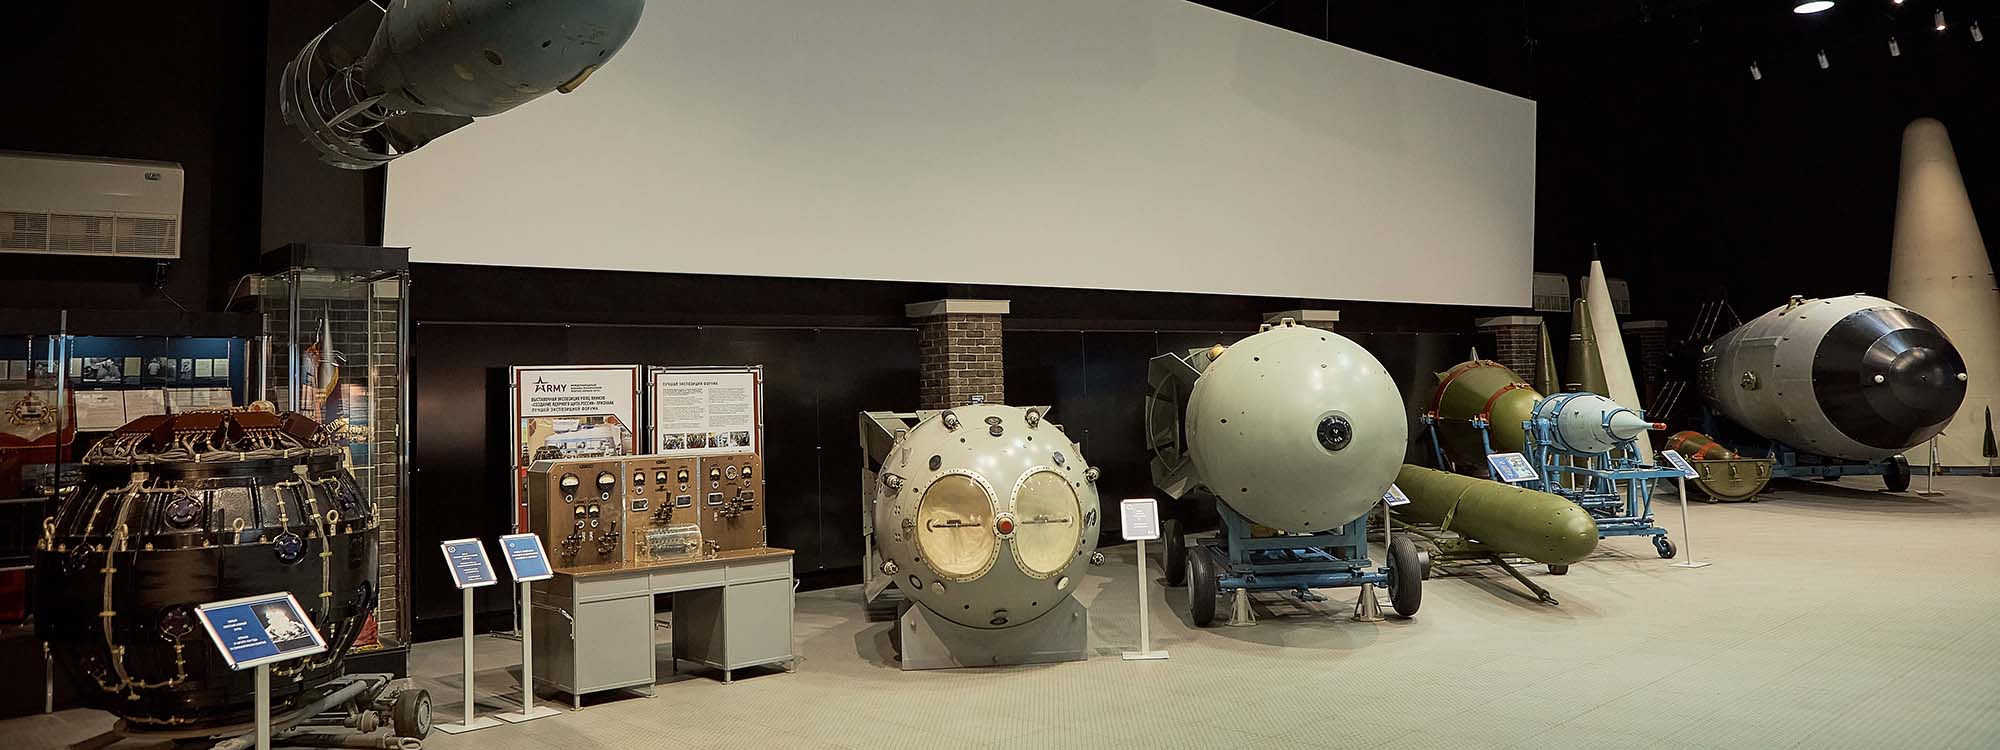 Музей ядерного оружия